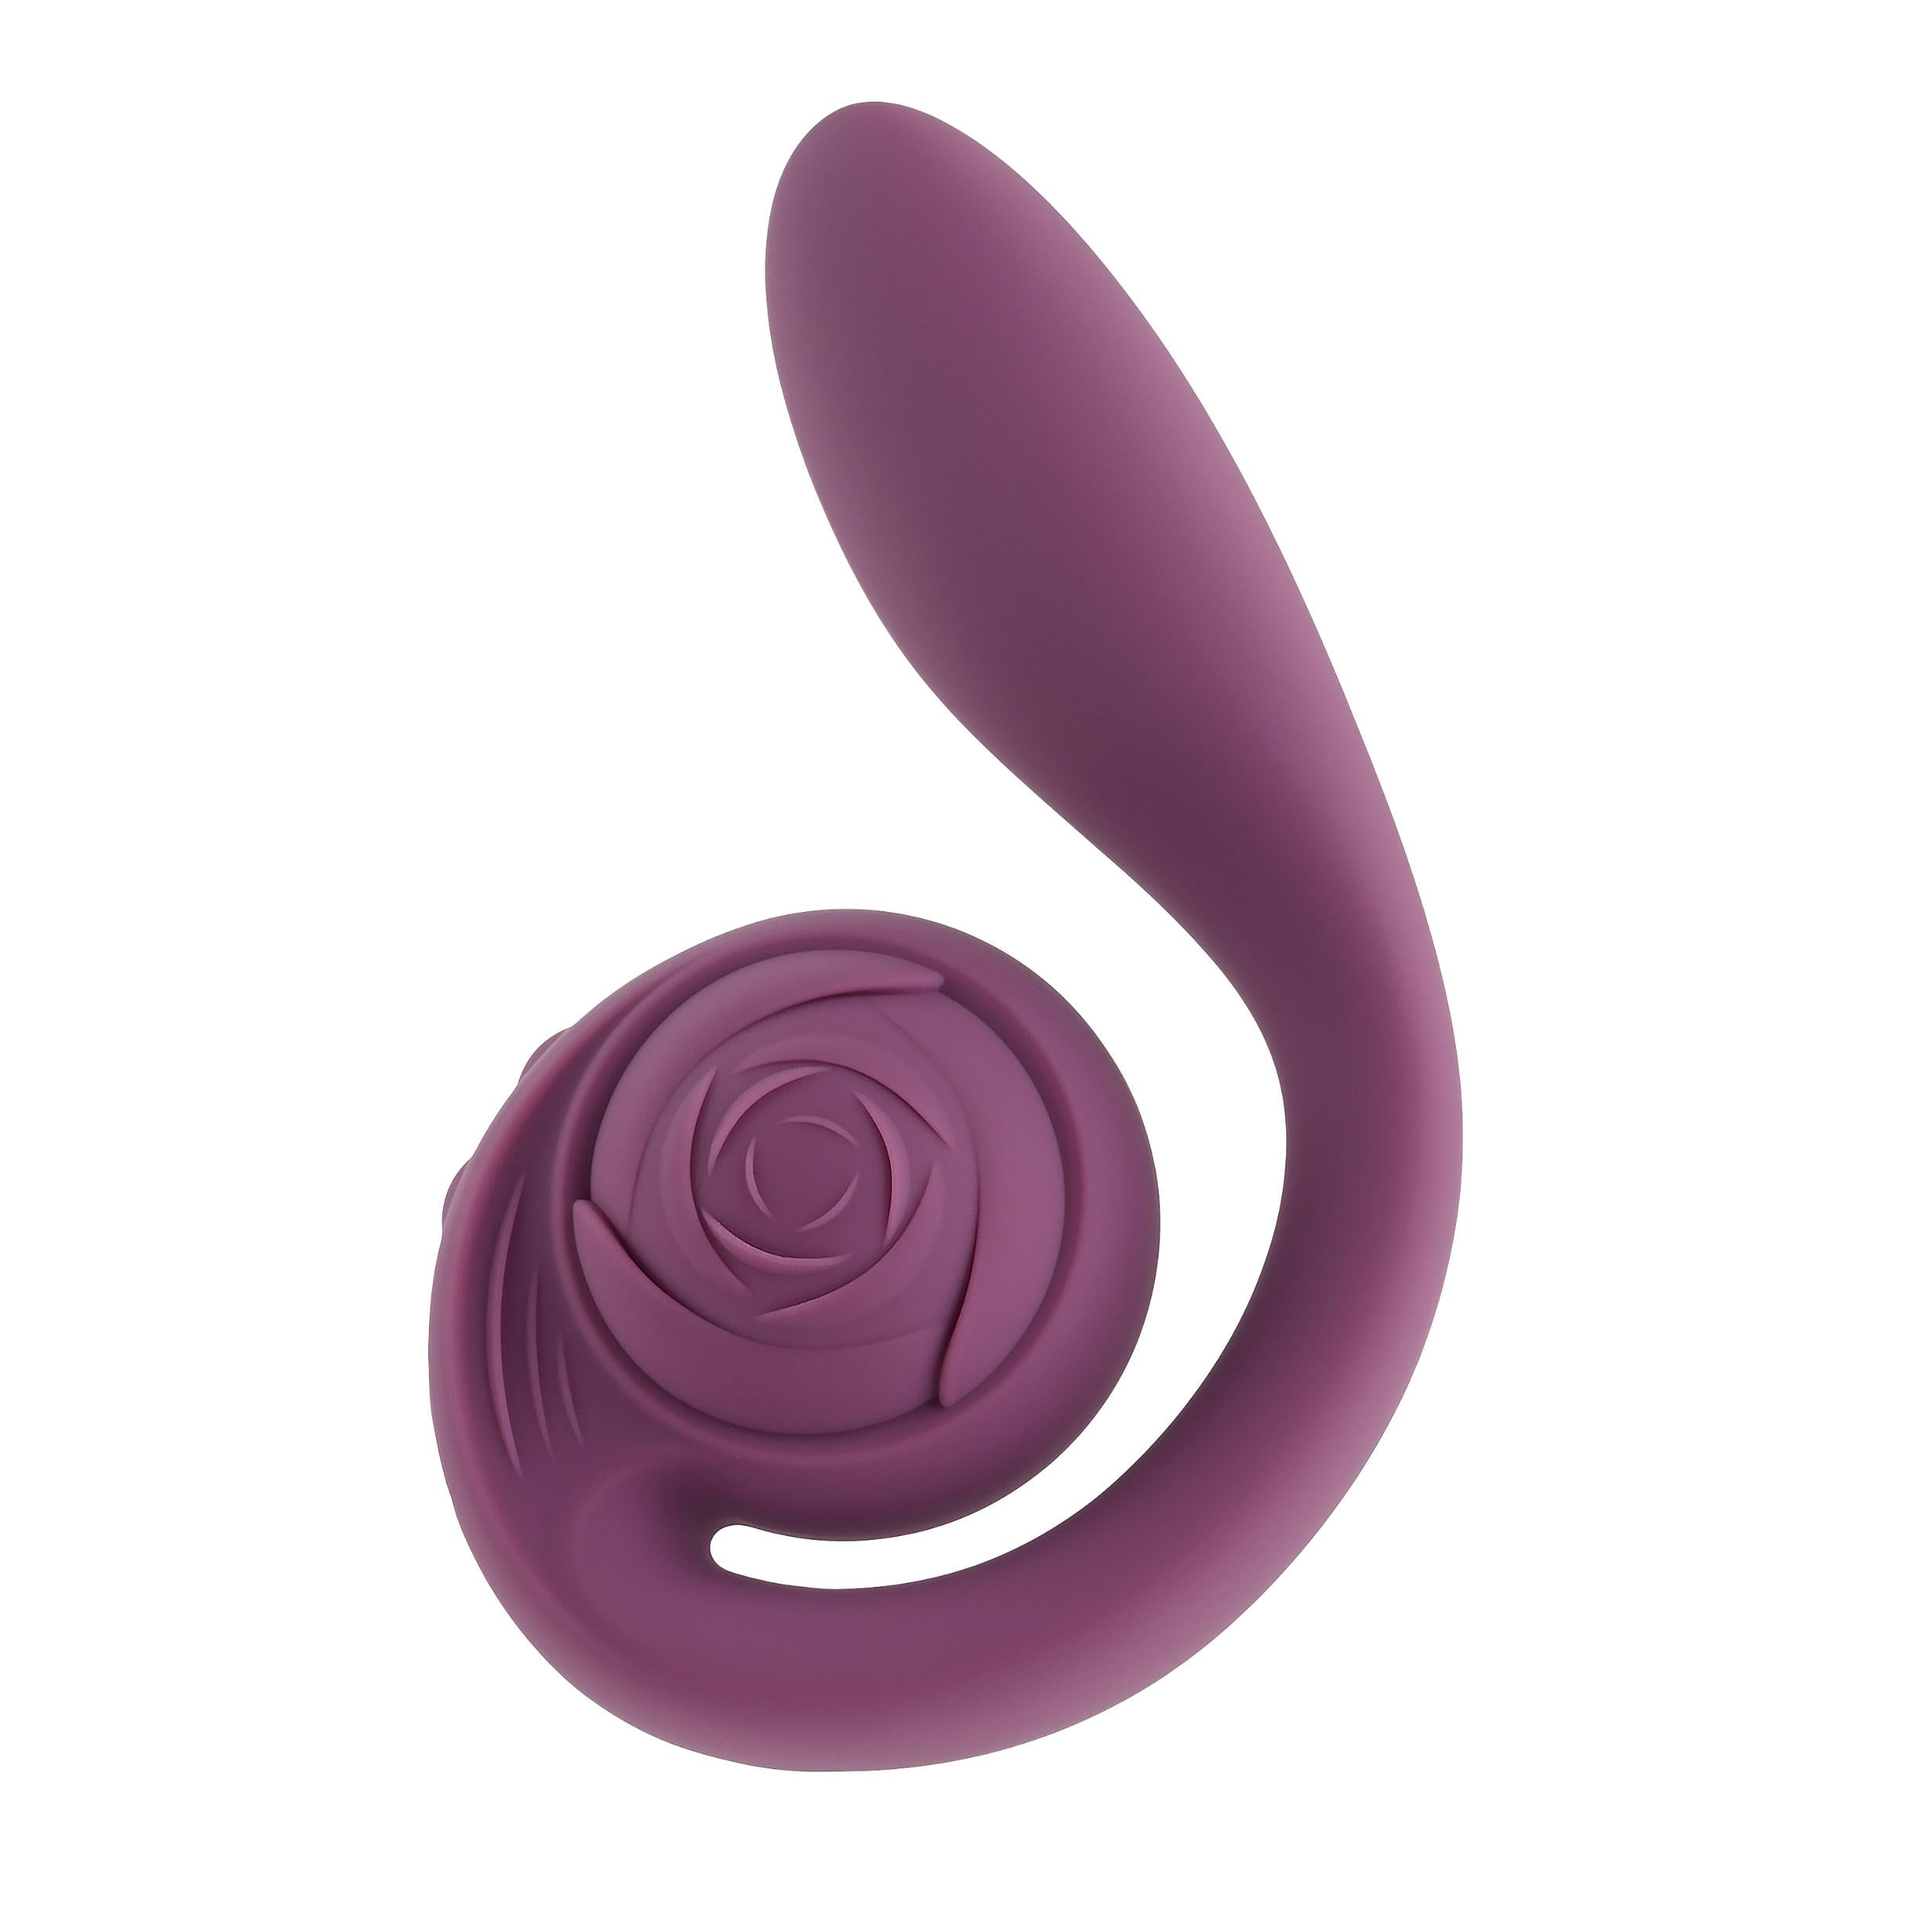 Poseable Rabbit Vibrator - Purple by Evolved